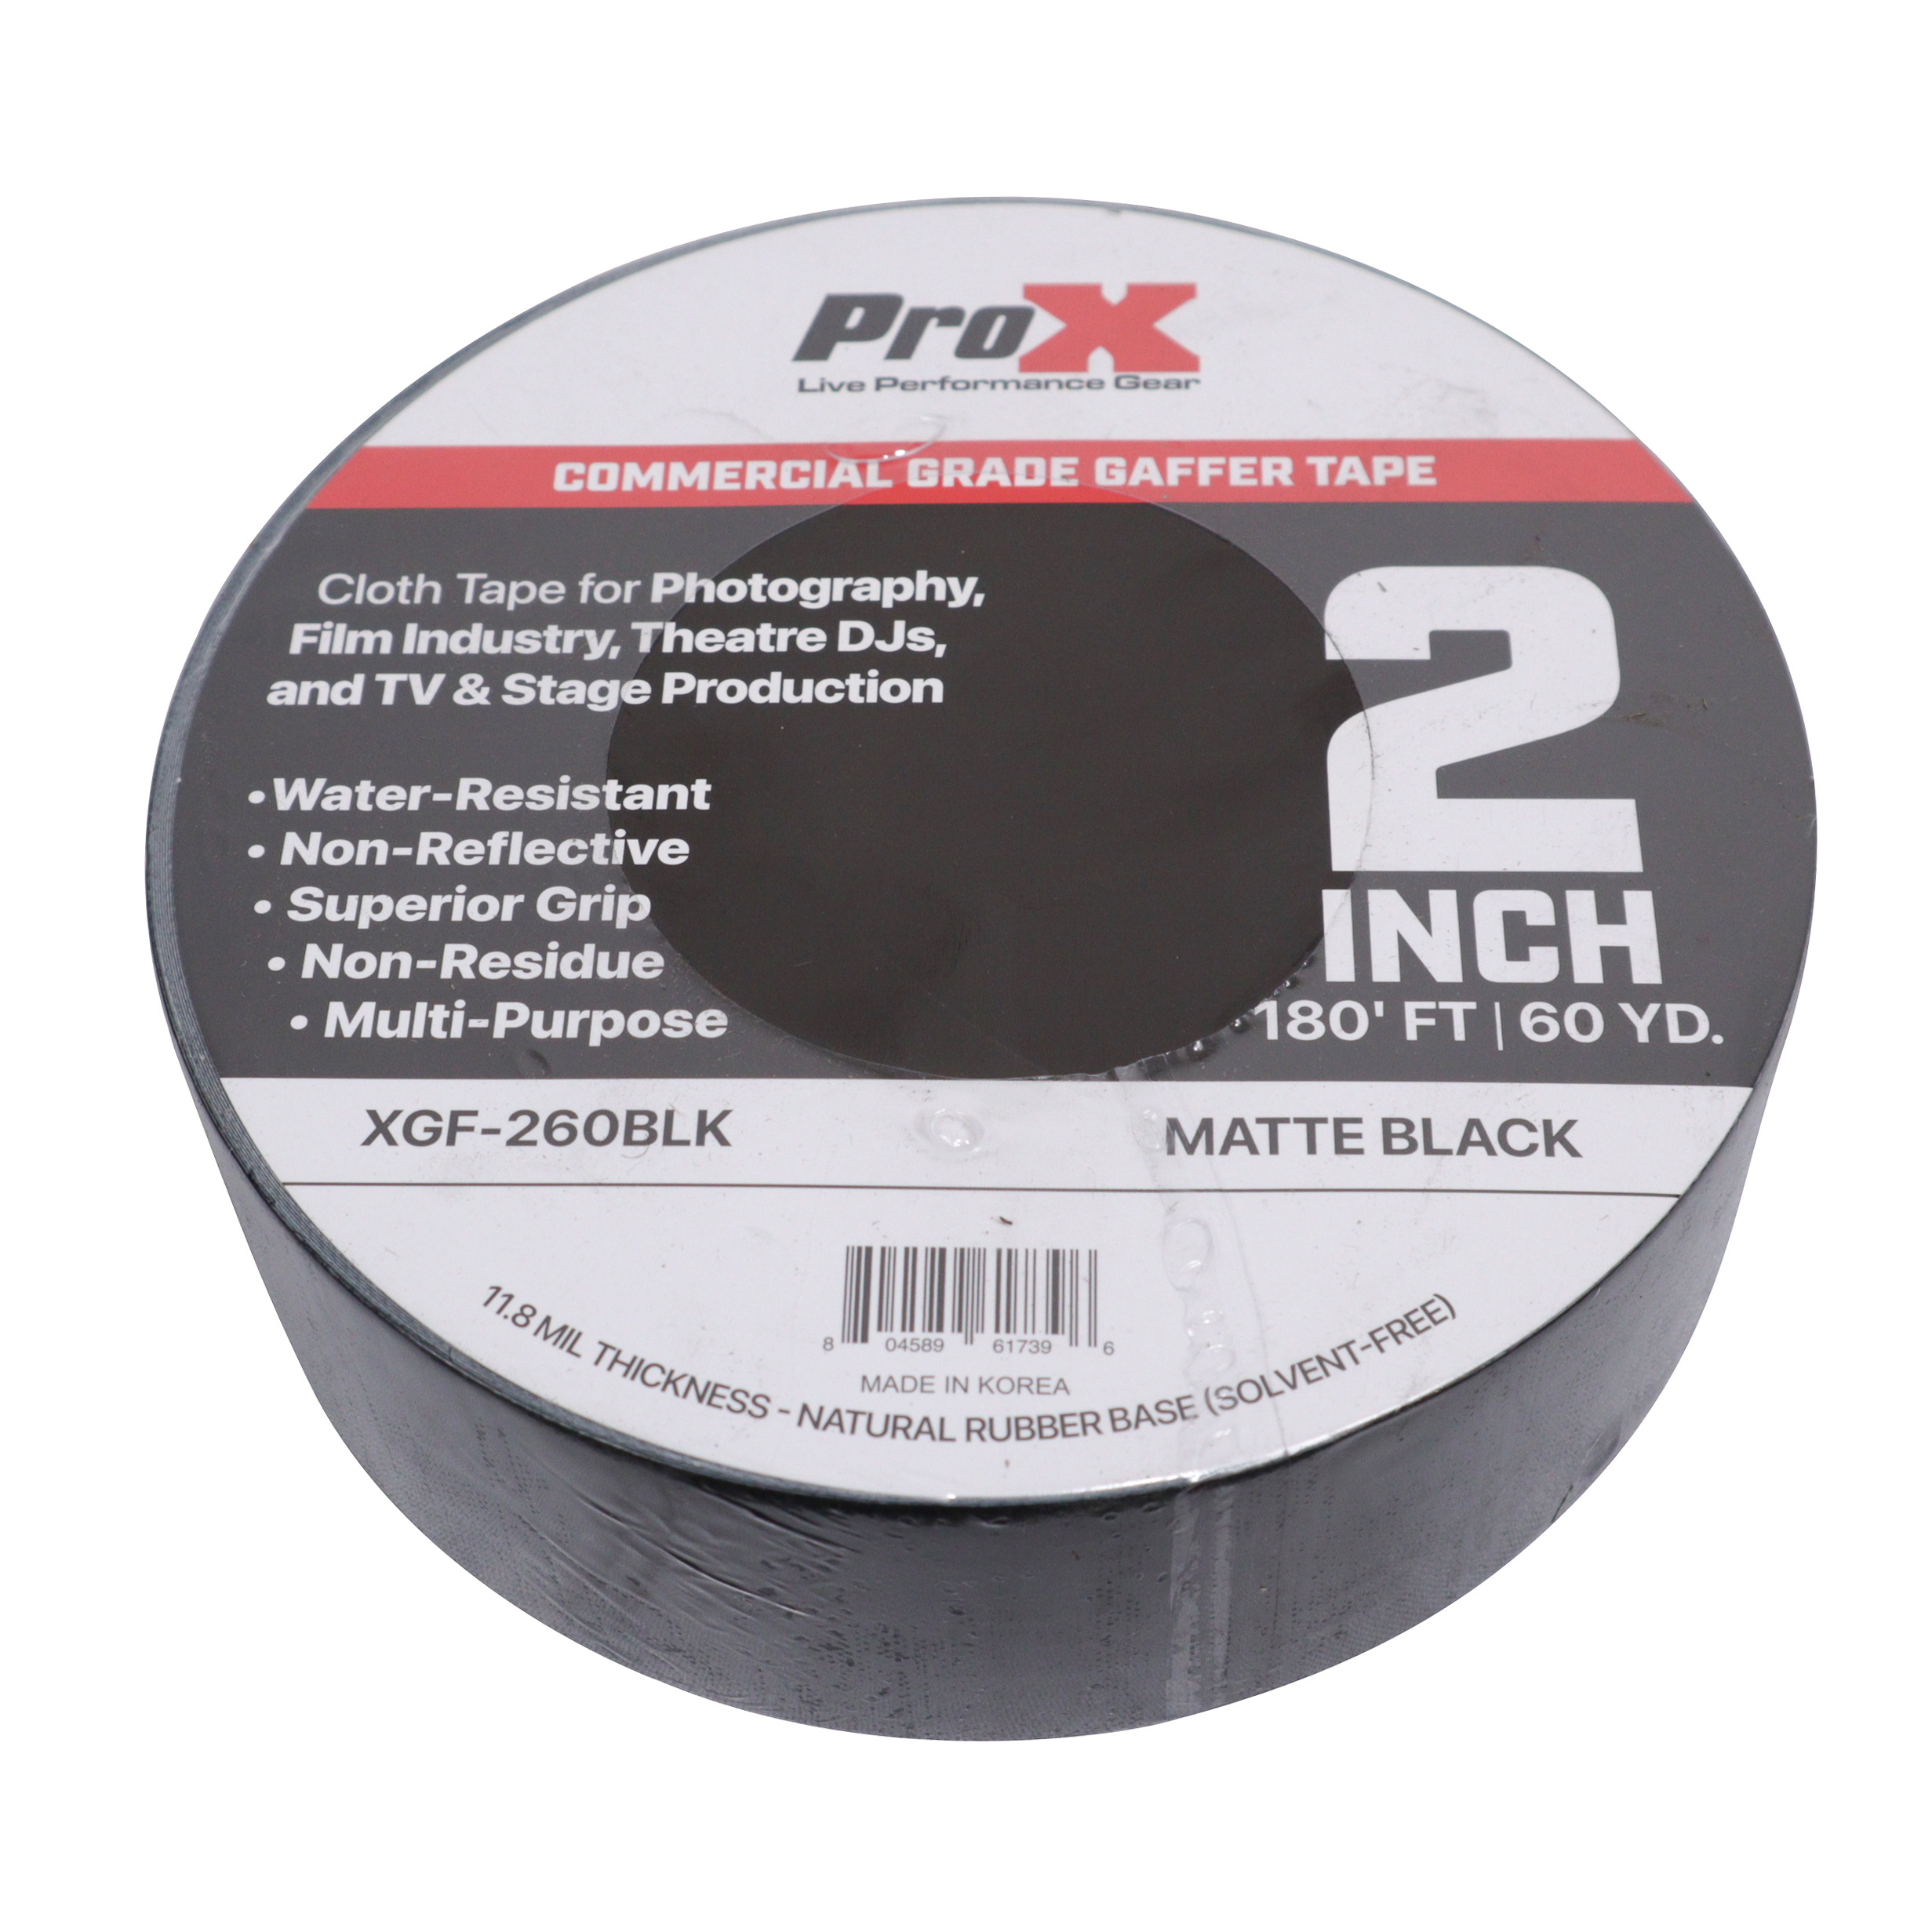 Prox XGF-260BLK 2 Commercial Grade Matte Gaffer Tape 180ft 60yd - Black